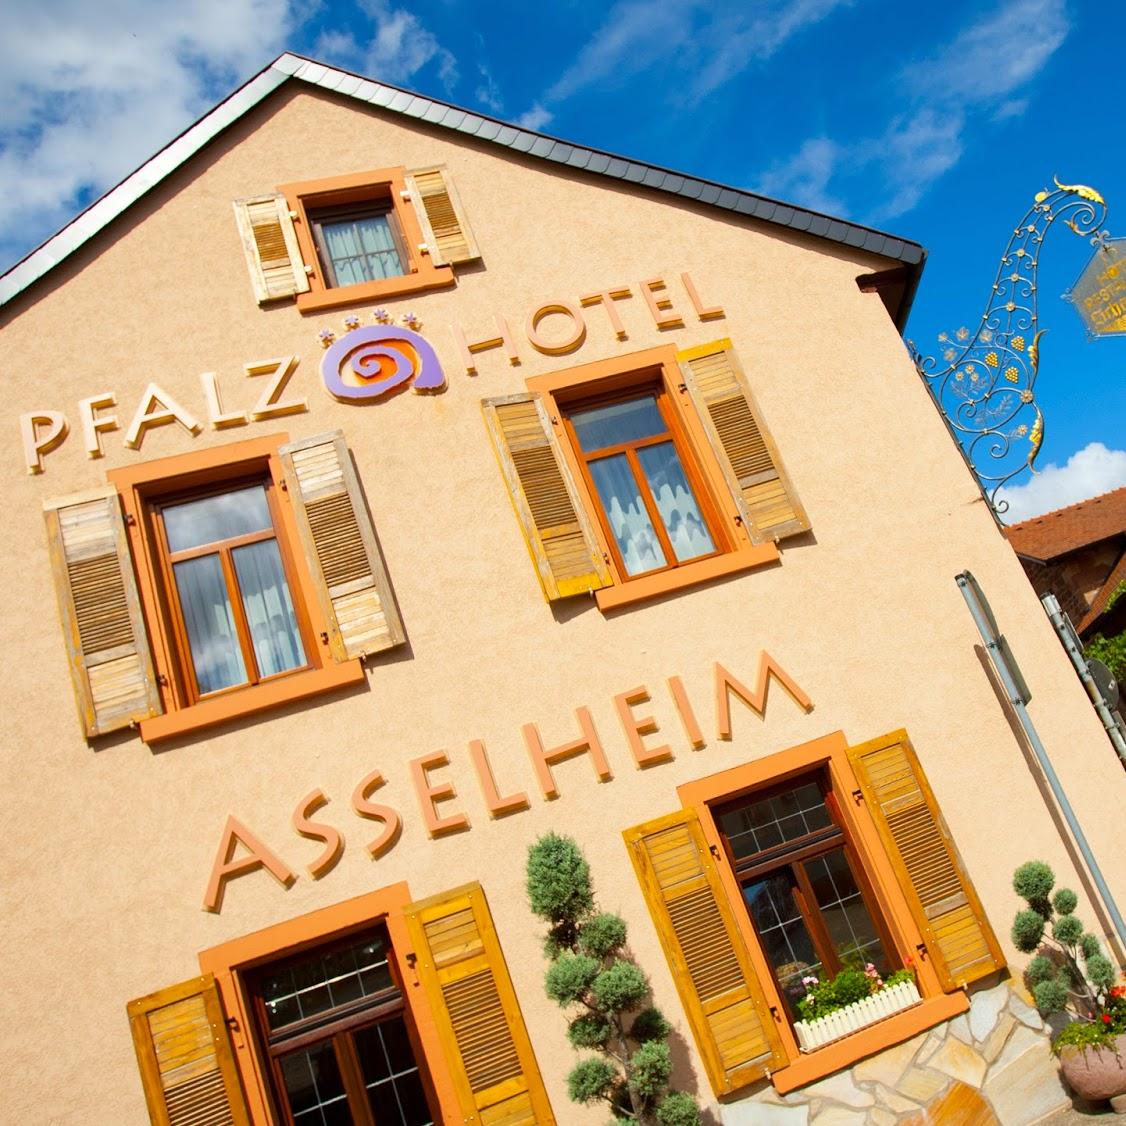 Restaurant "Pfalzhotel Asselheim" in Grünstadt